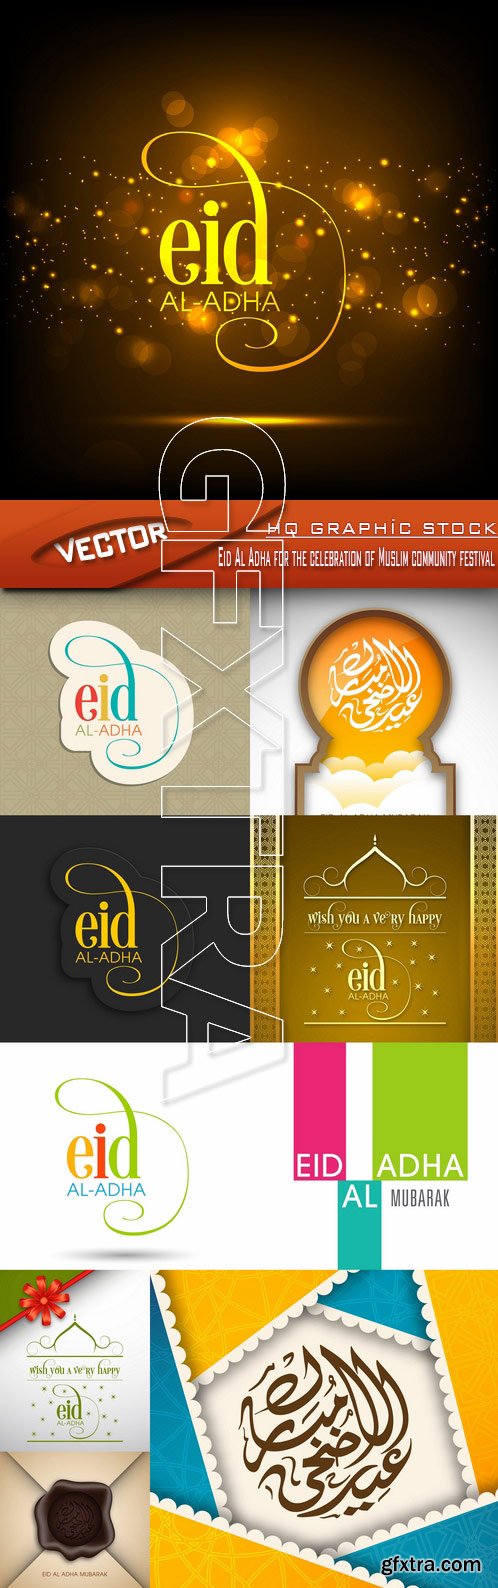 Stock Vector - Eid Al Adha for the celebration of Muslim community festival